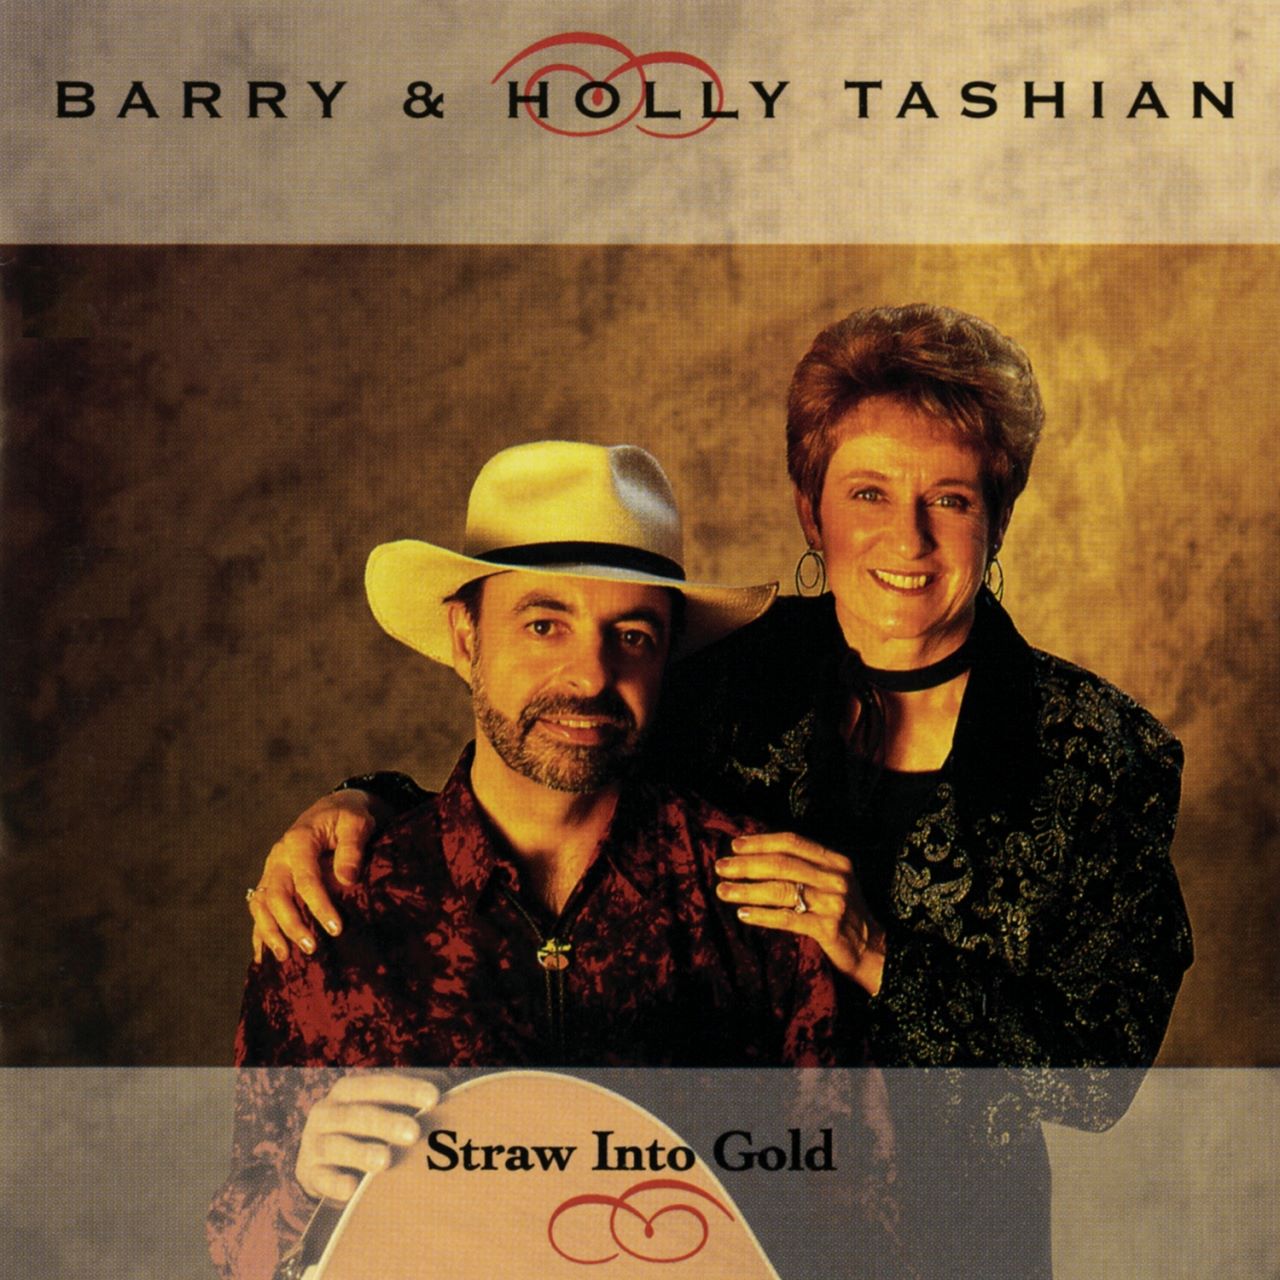 Barry & Holly Tashian - Straw Into Gold cover album